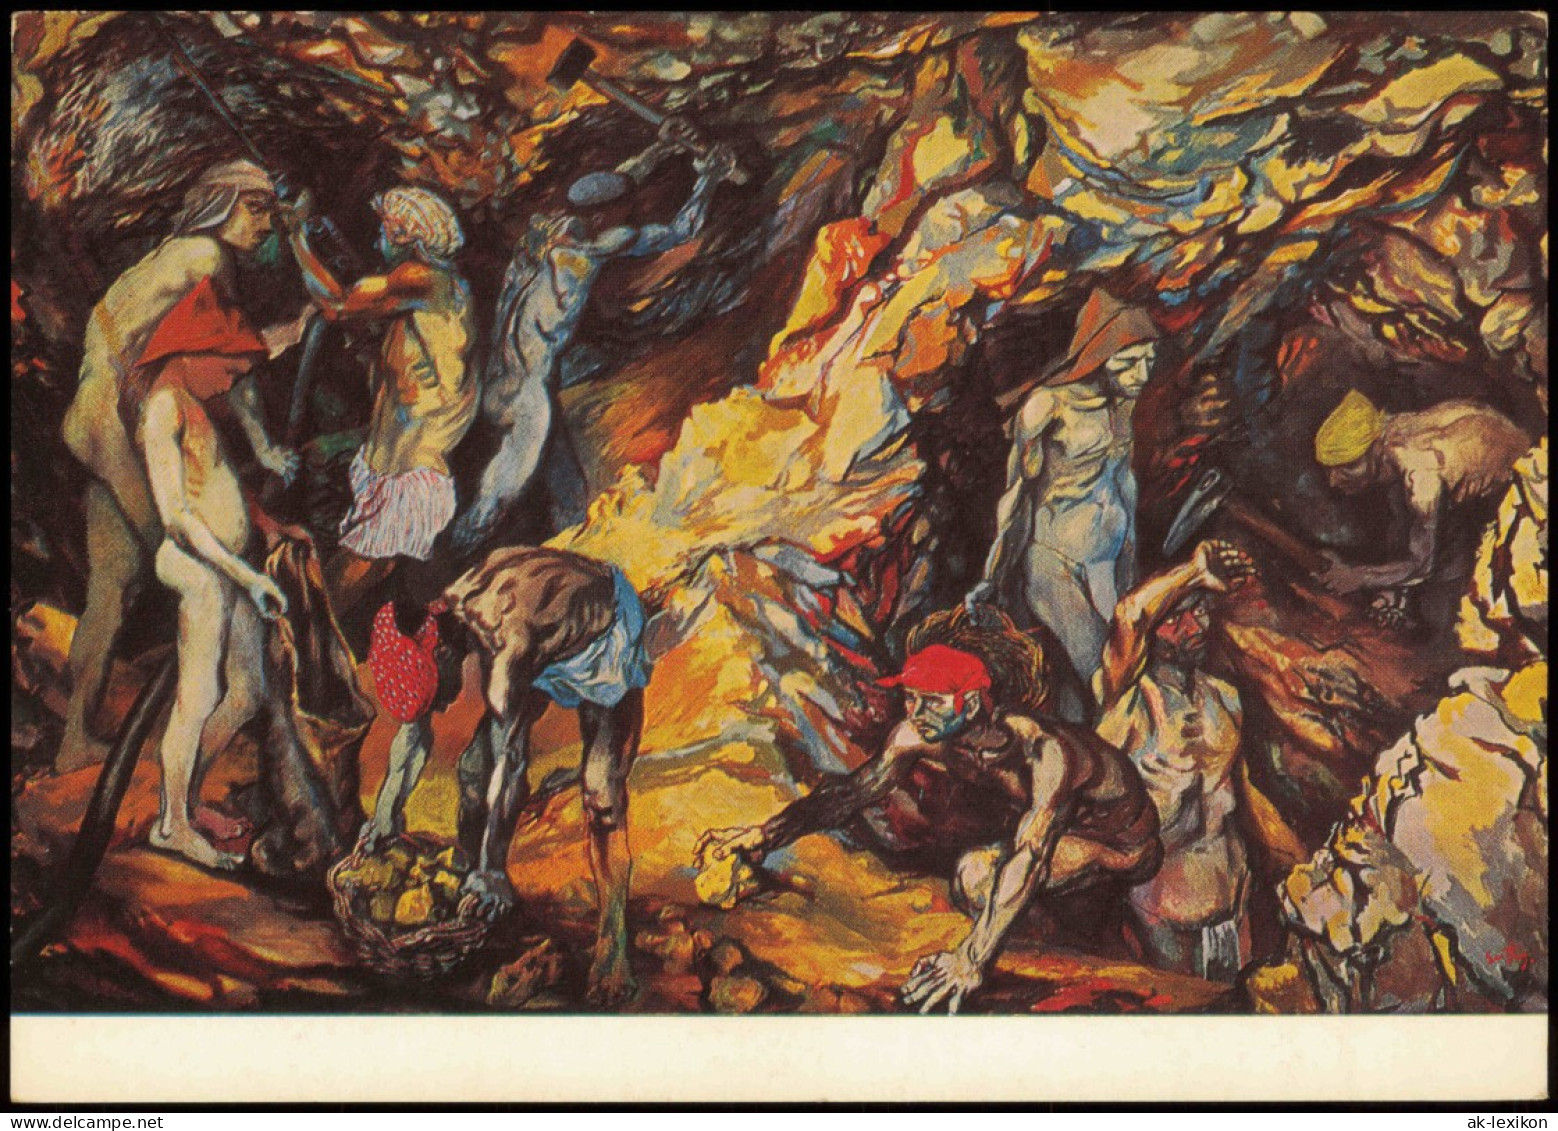 Künstlerkarte Kunstwerk: RENATO GUTTUSO (geb. 1912) Schwefelgrube 1970 - Malerei & Gemälde